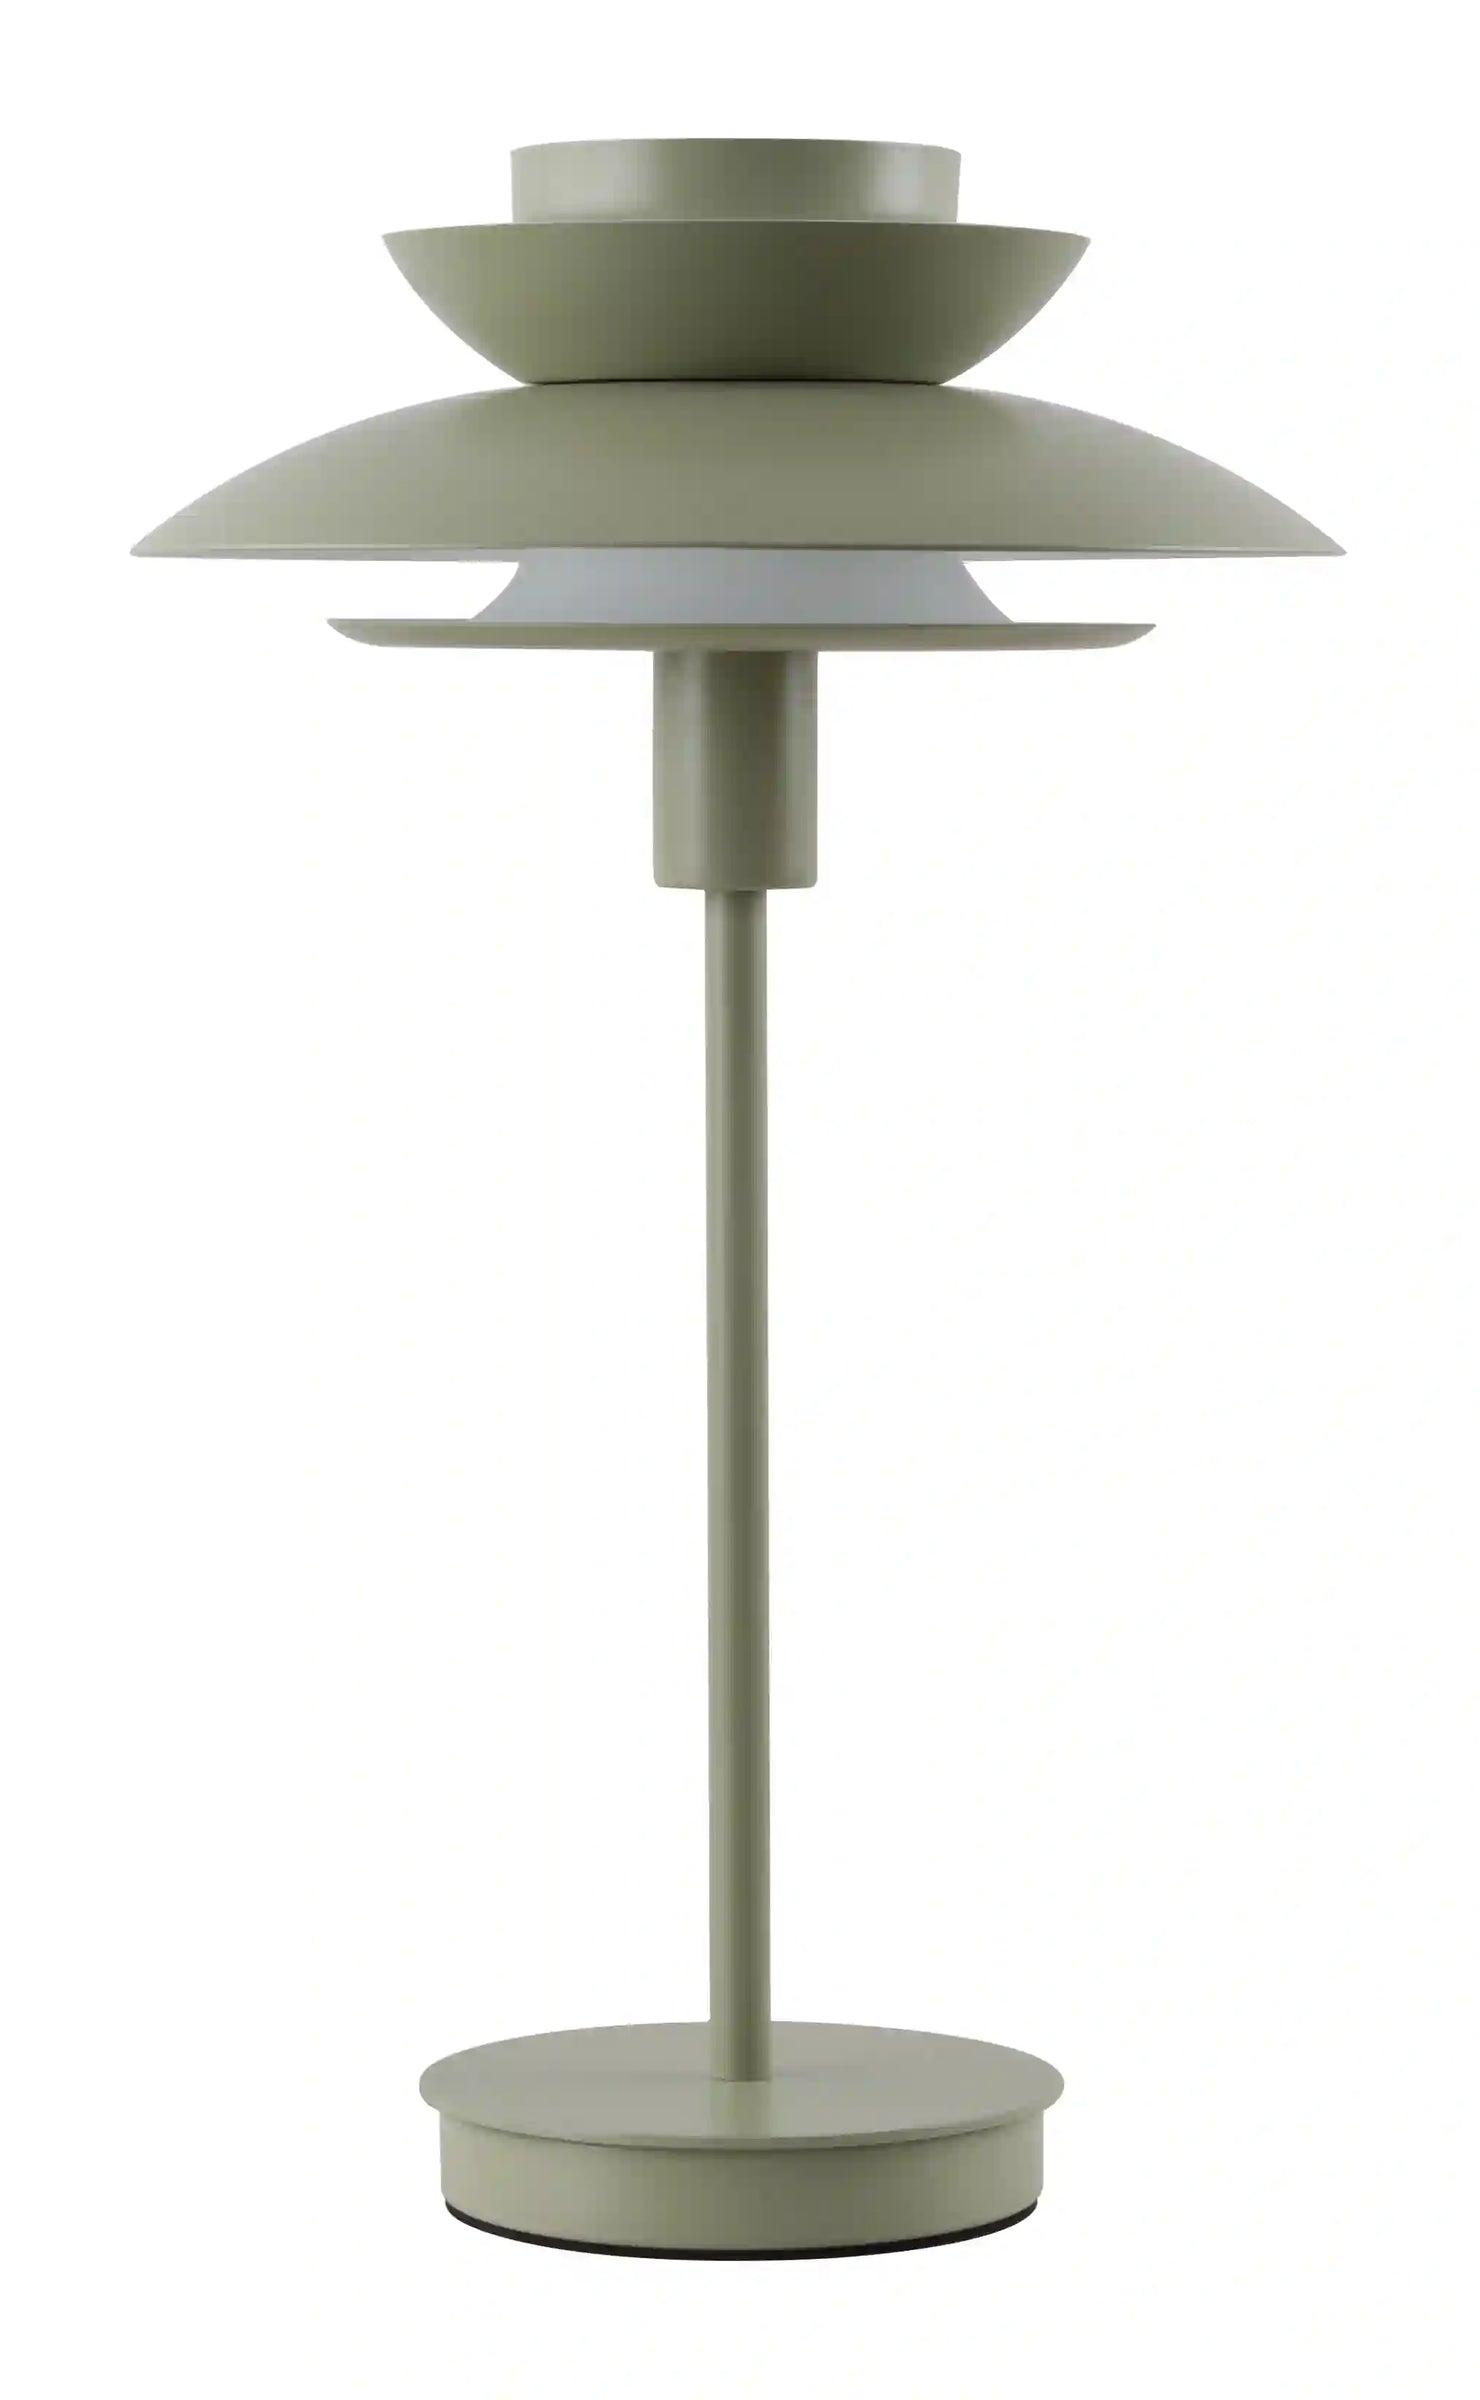 Selected image for Rea Light Leda HN2584-452 Stona lampa, E27, 25W, Ø30cm, Svetlozelena